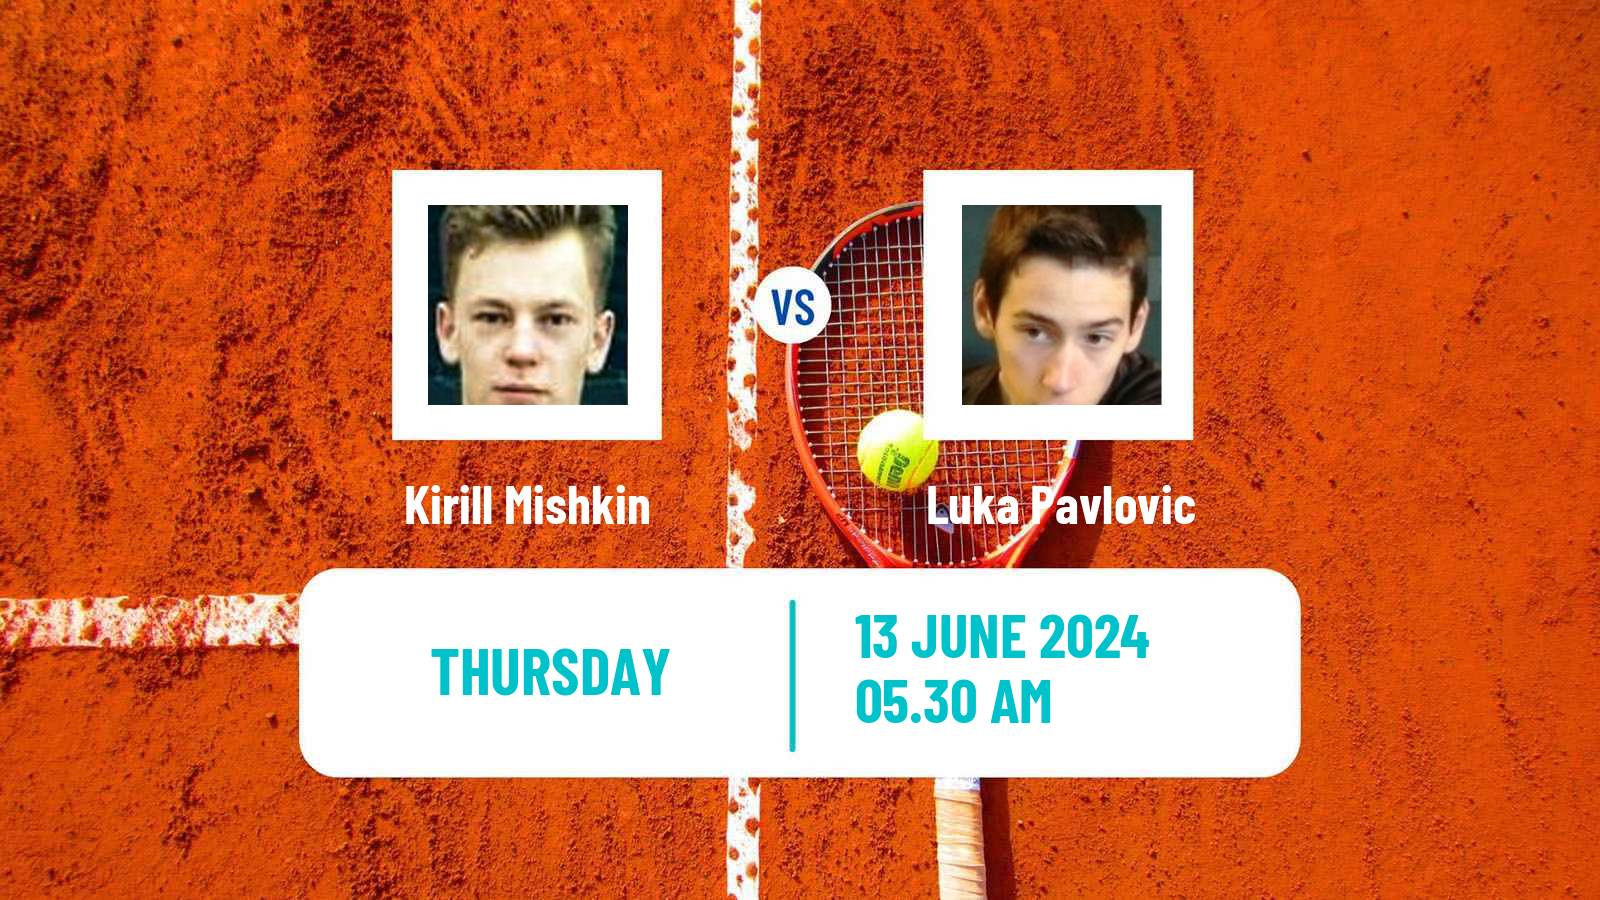 Tennis ITF M15 Kursumlijska Banja 7 Men Kirill Mishkin - Luka Pavlovic